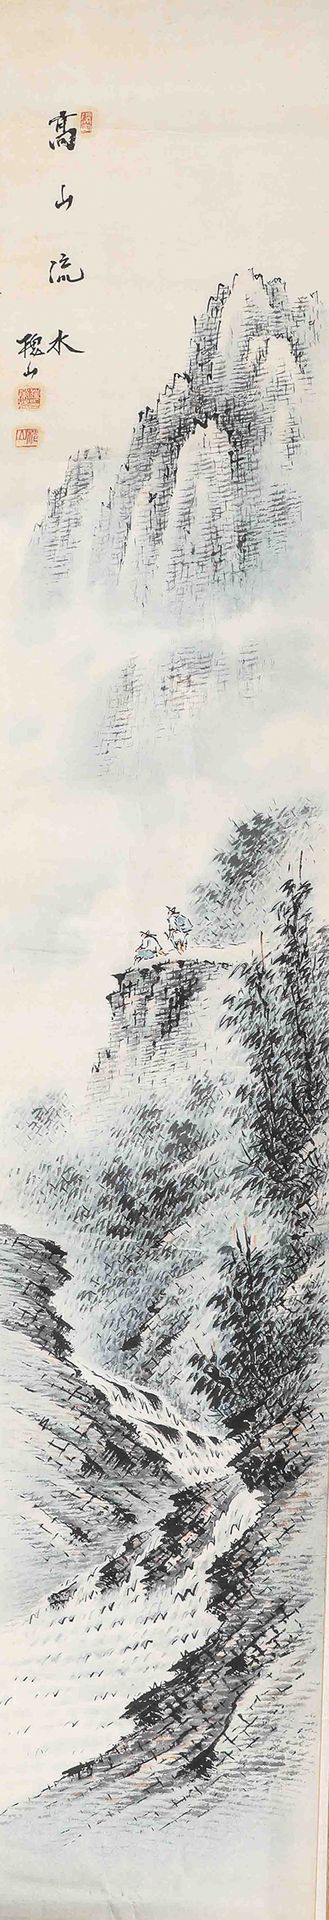 Null 
Kakemono, pintura de montaña.

China Siglo XX

H. 122 cm, L.22 cm

(firma)